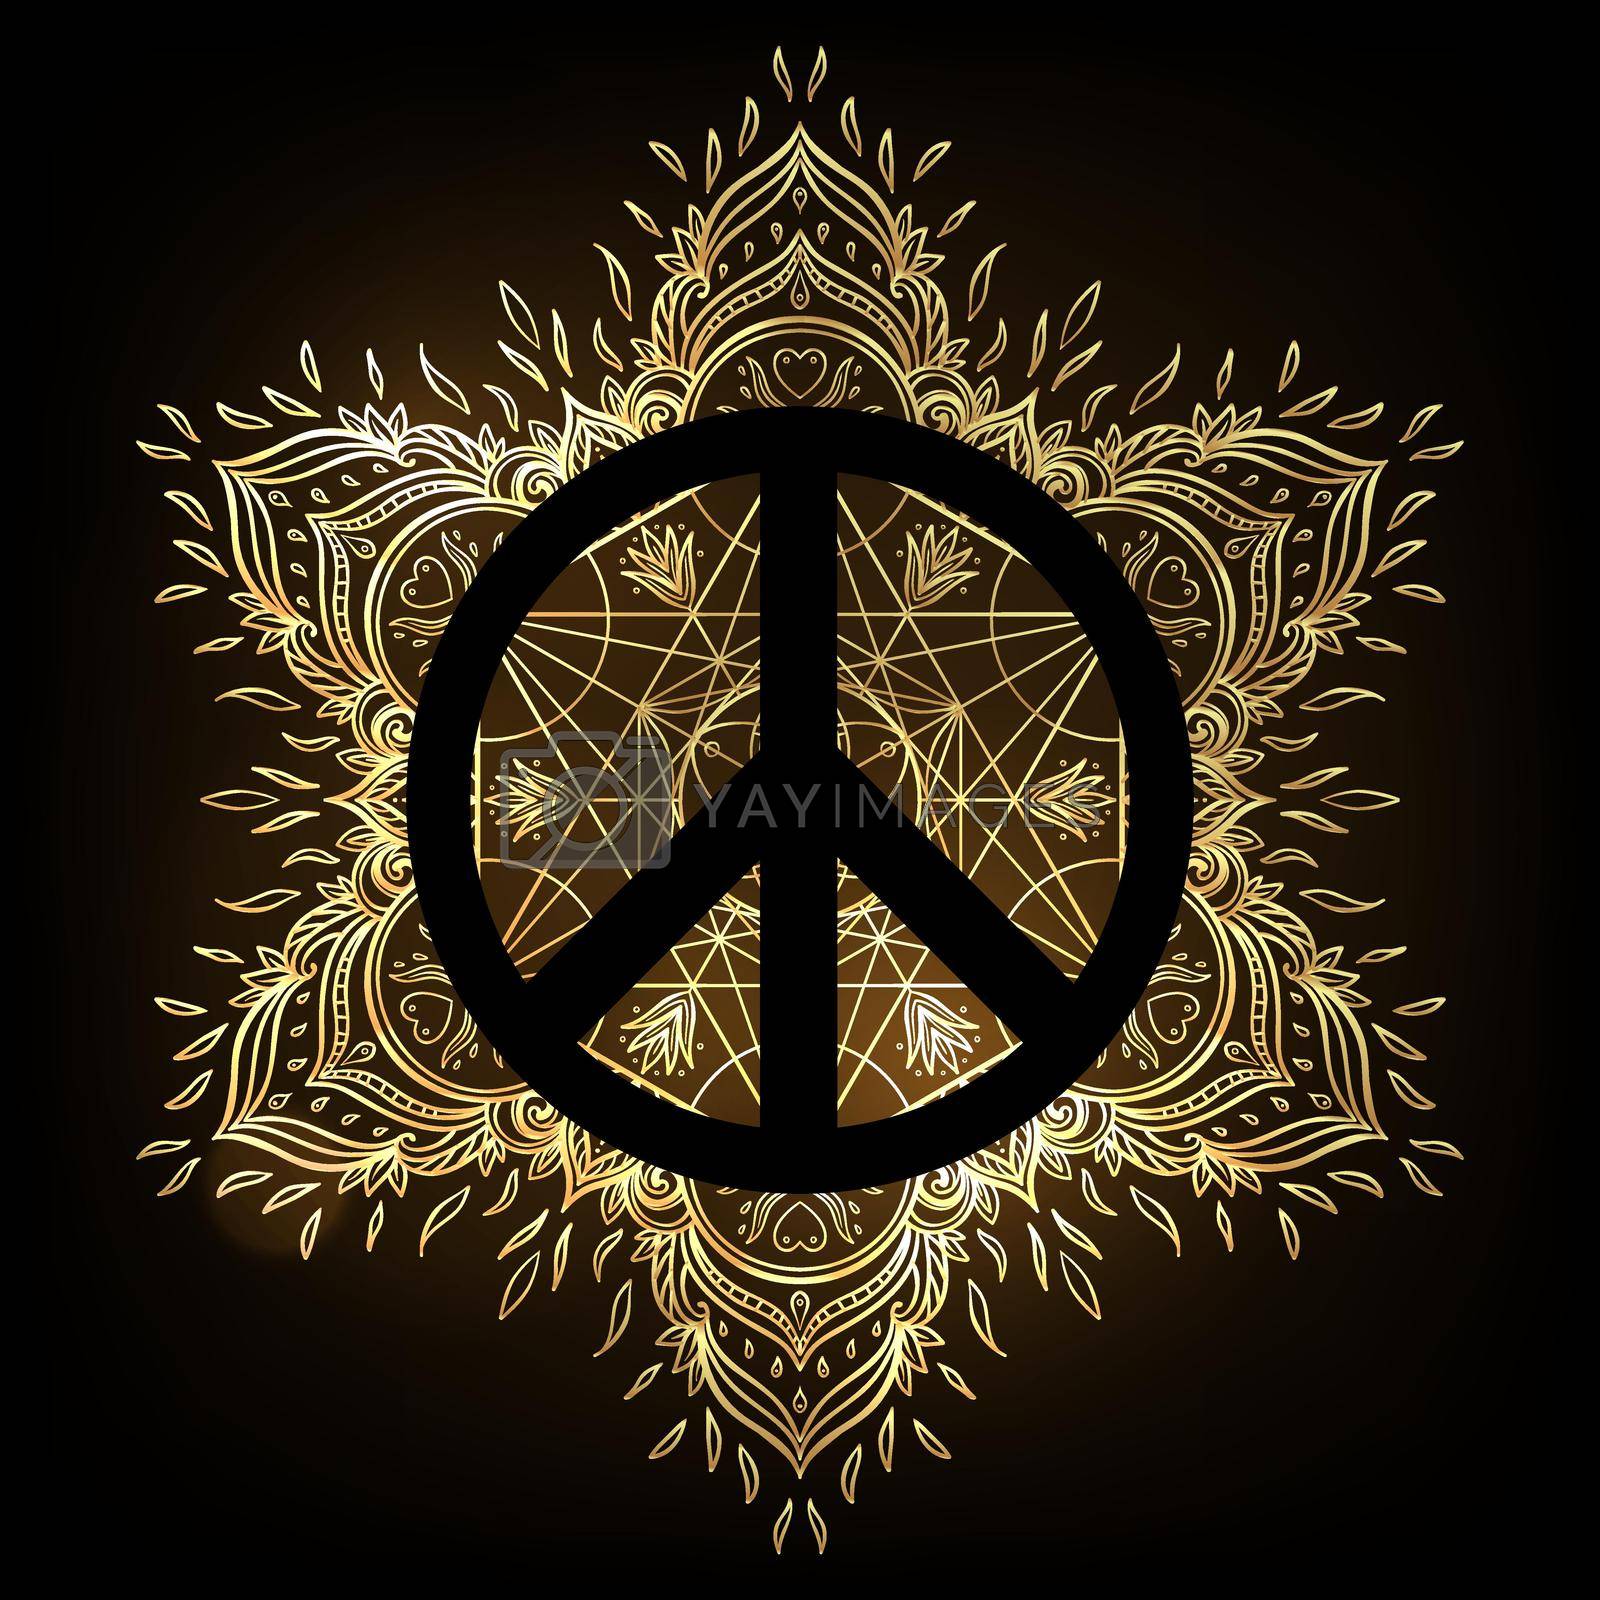 Royalty free image of Peace symbol over decorative ornate background mandala round pattern. Boho, hippie style. Freedom, spirituality, occultism, textiles art. Vector illustration by varka